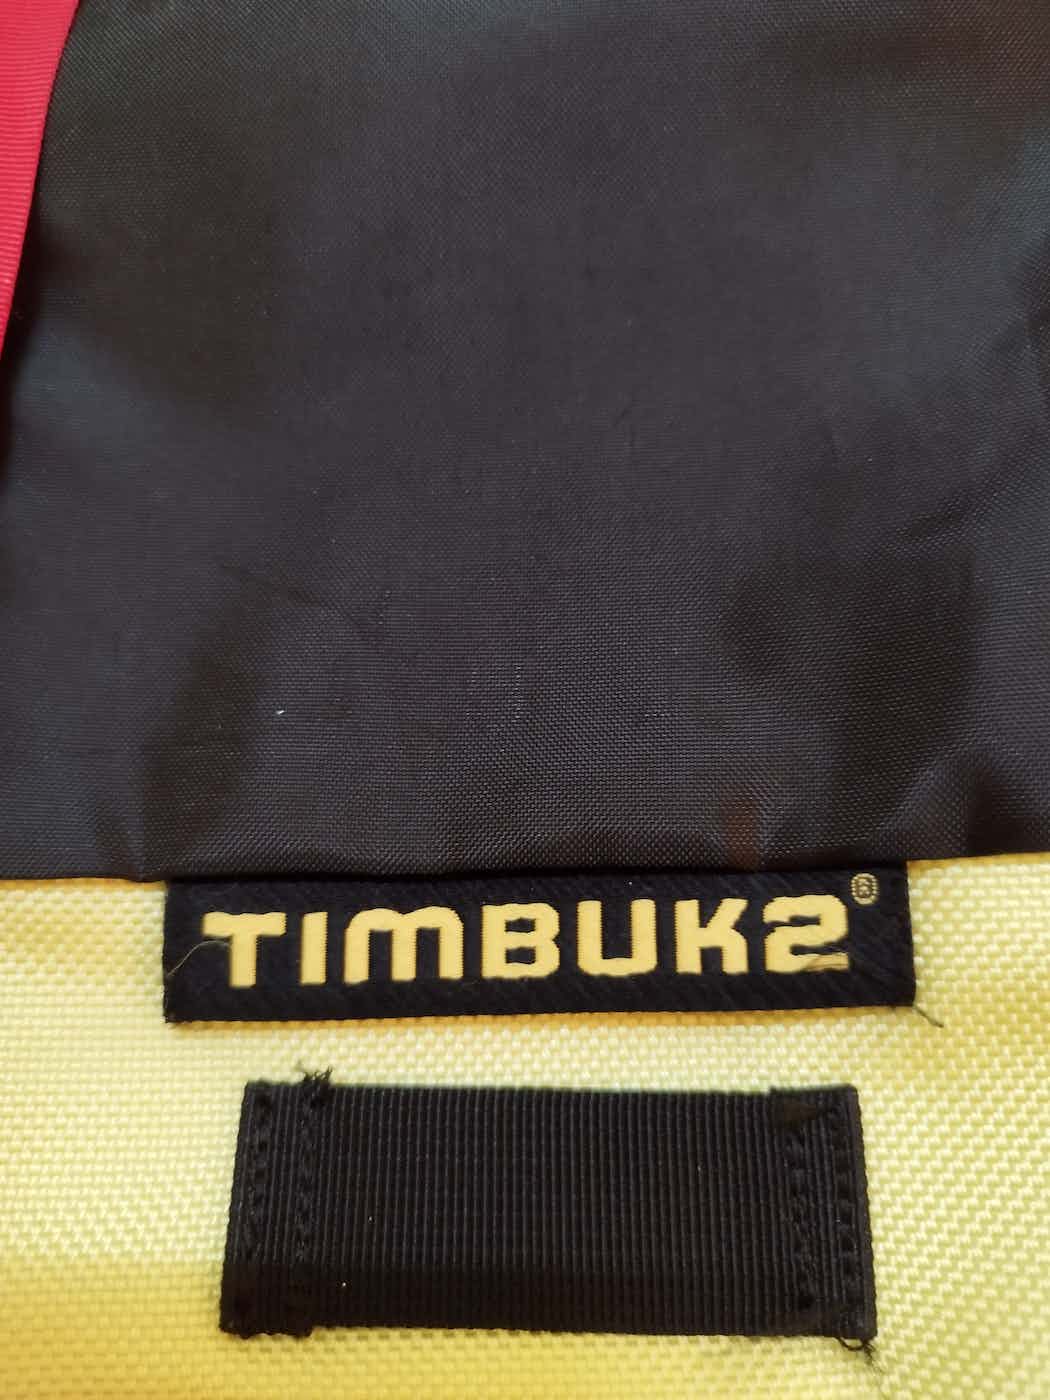 Vintage Timbuk2 Messenger Bag. 90s Y2K.